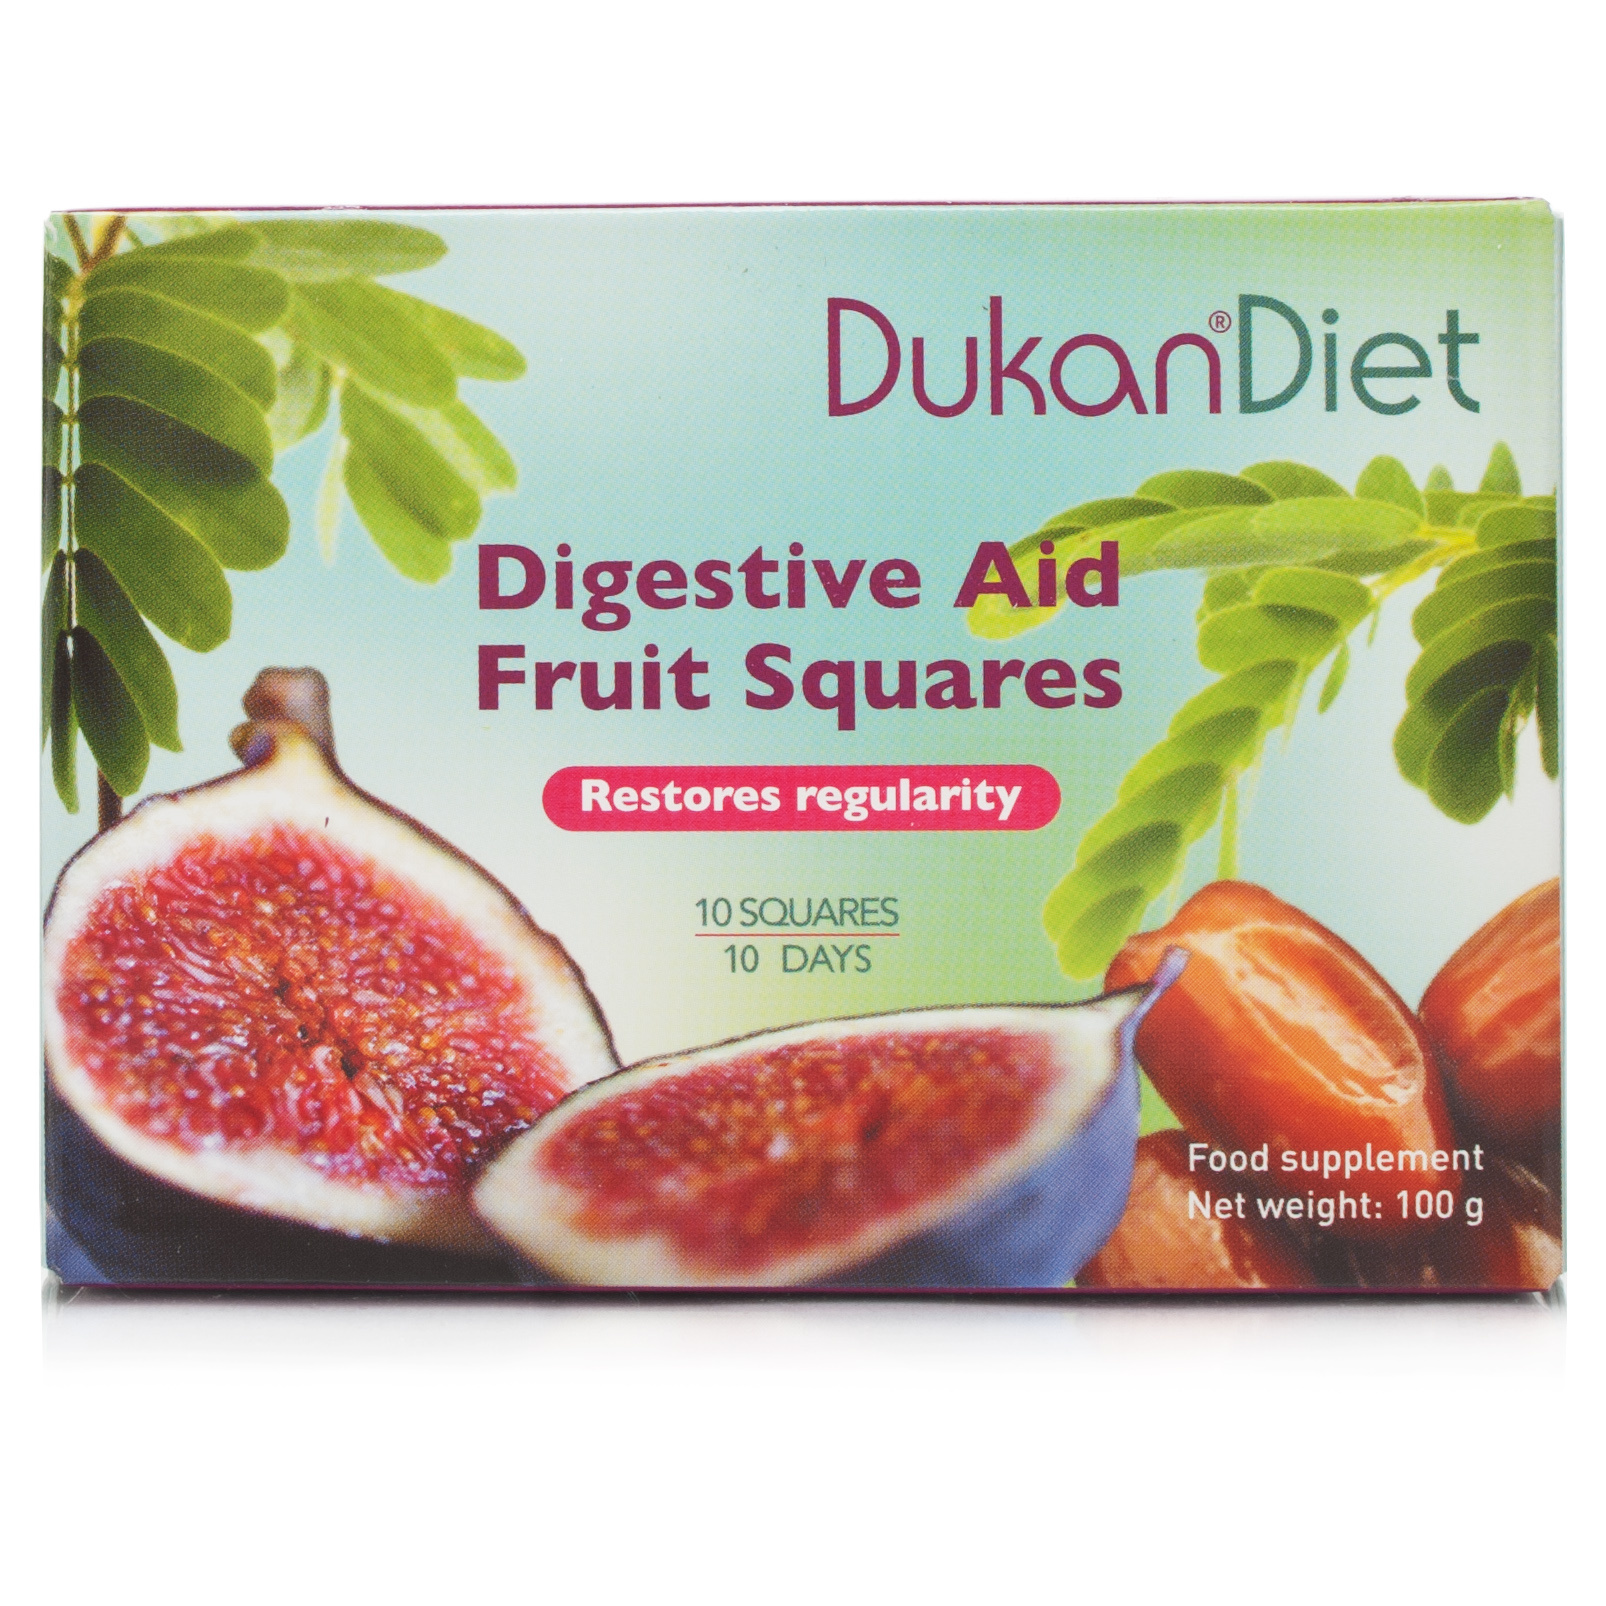 Dukan Diet Digestive Aid Fruit Squares